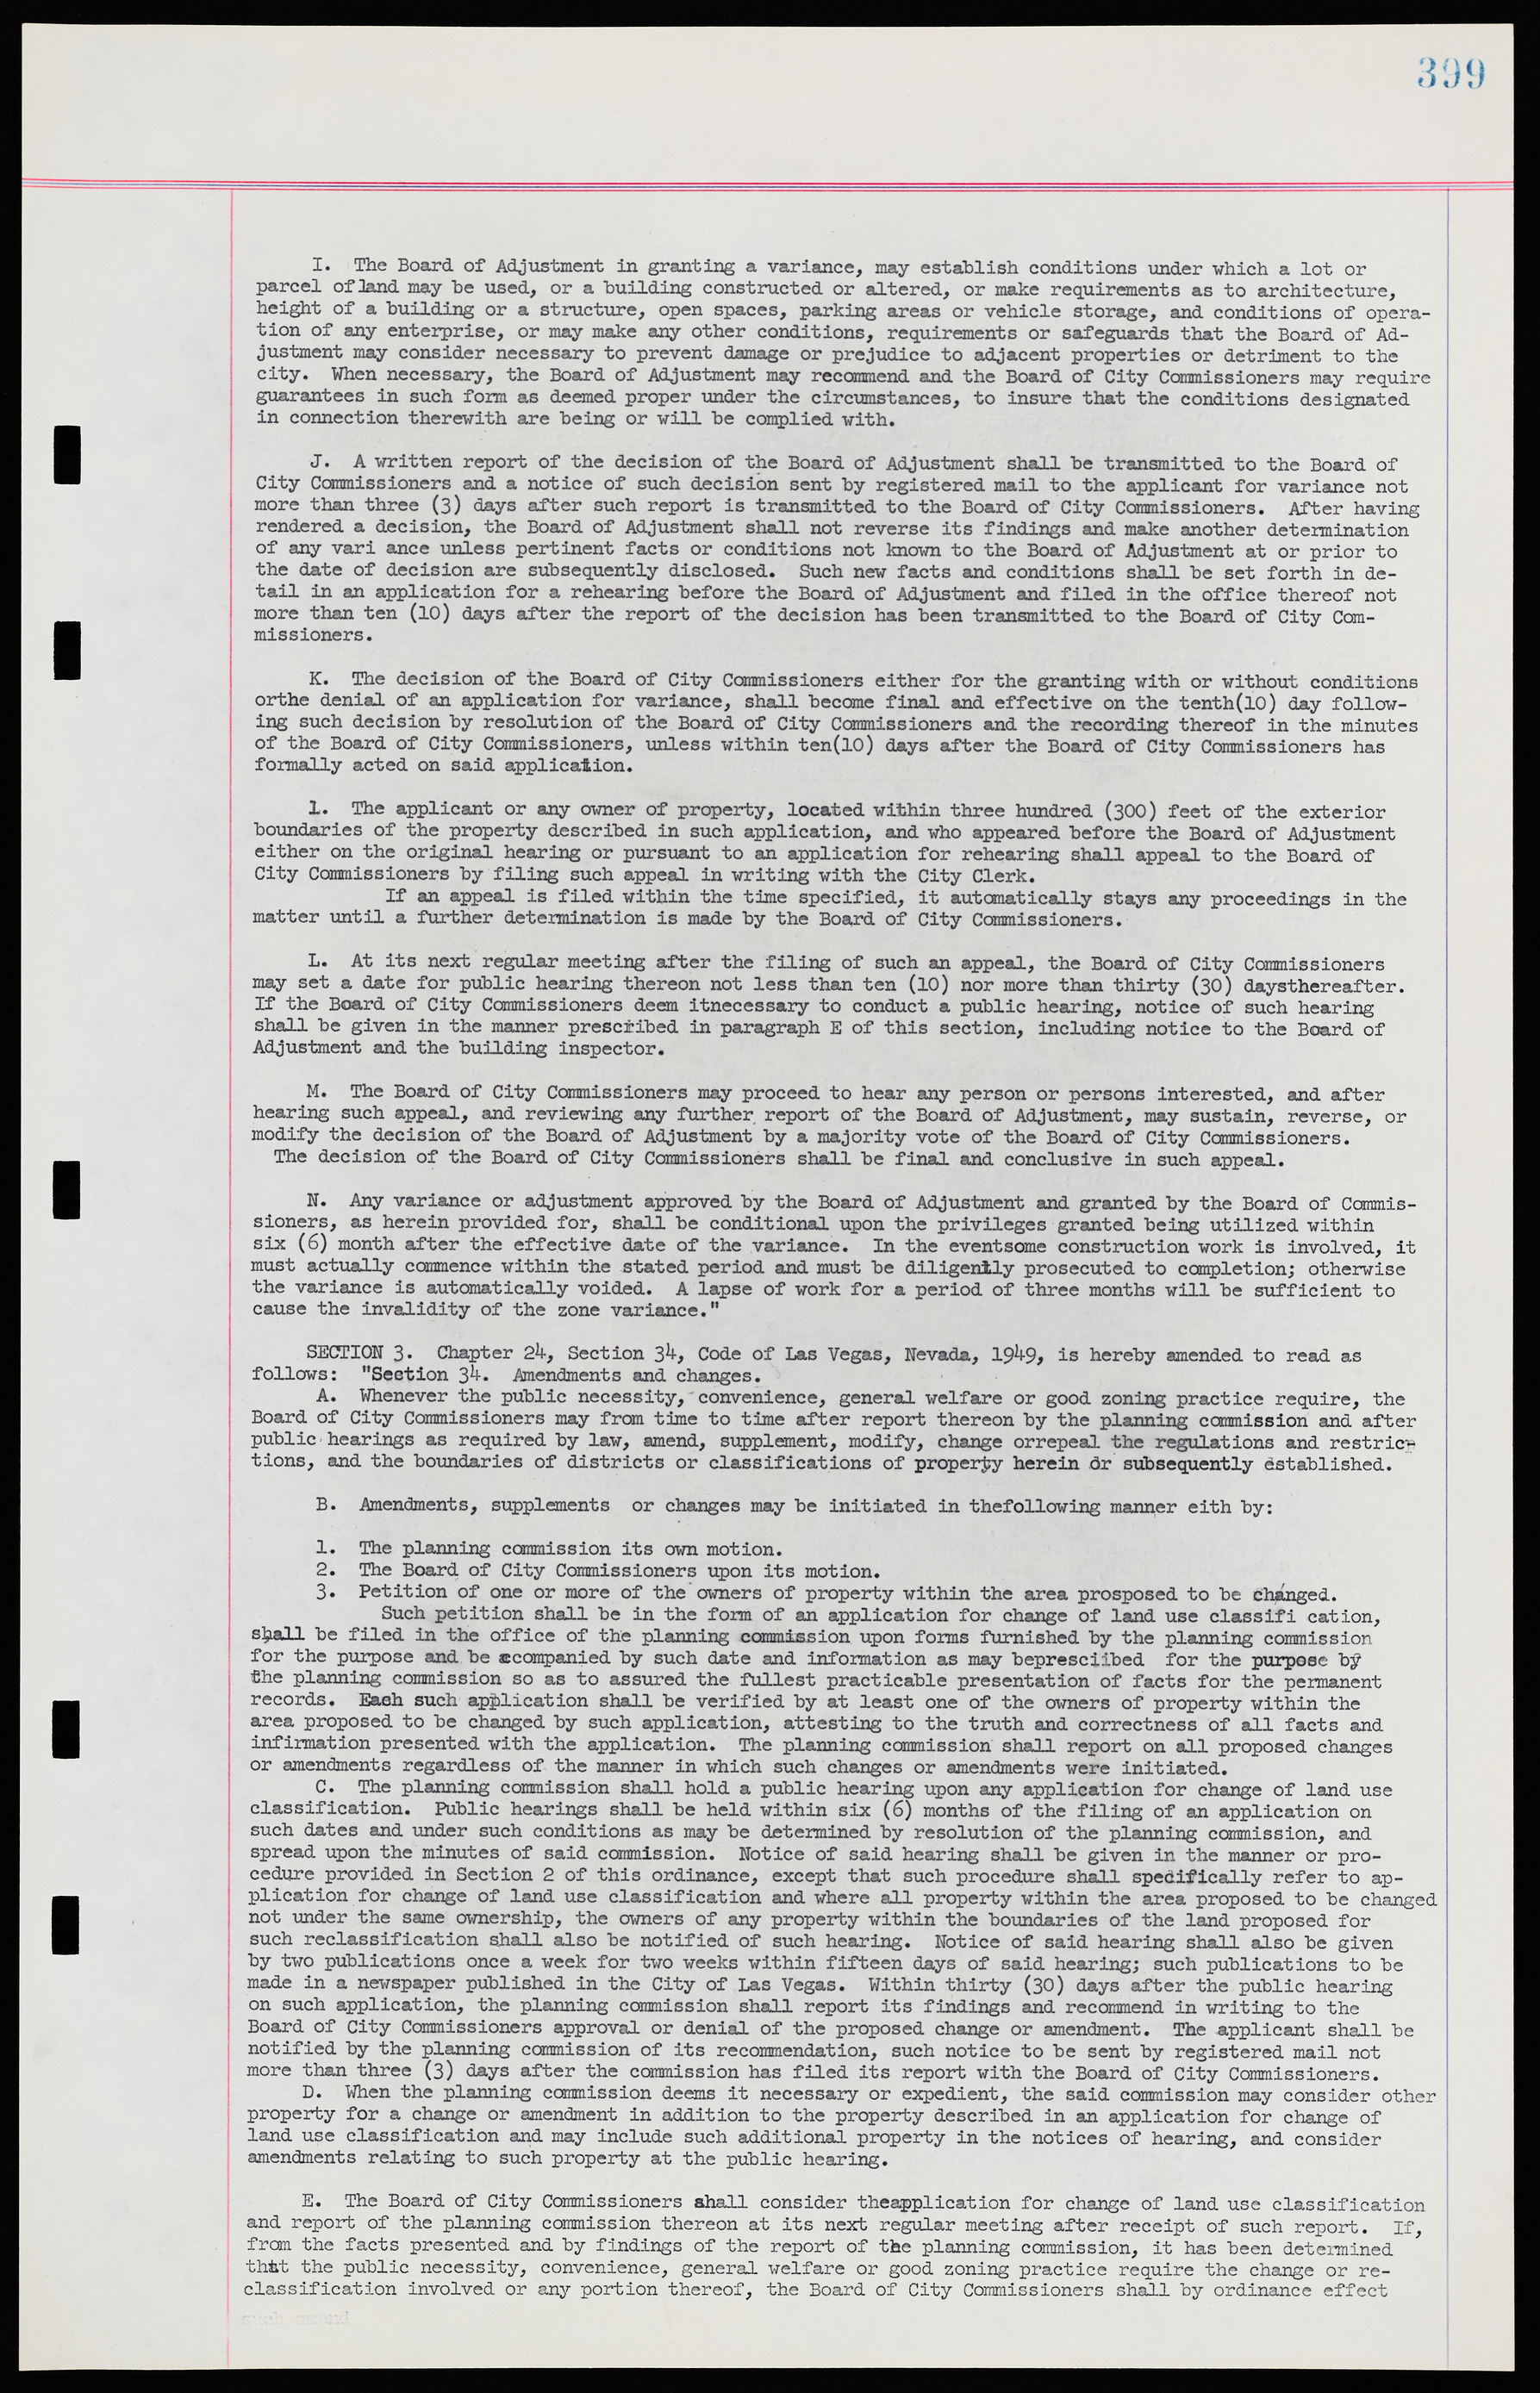 Las Vegas City Ordinances, November 13, 1950 to August 6, 1958, lvc000015-407